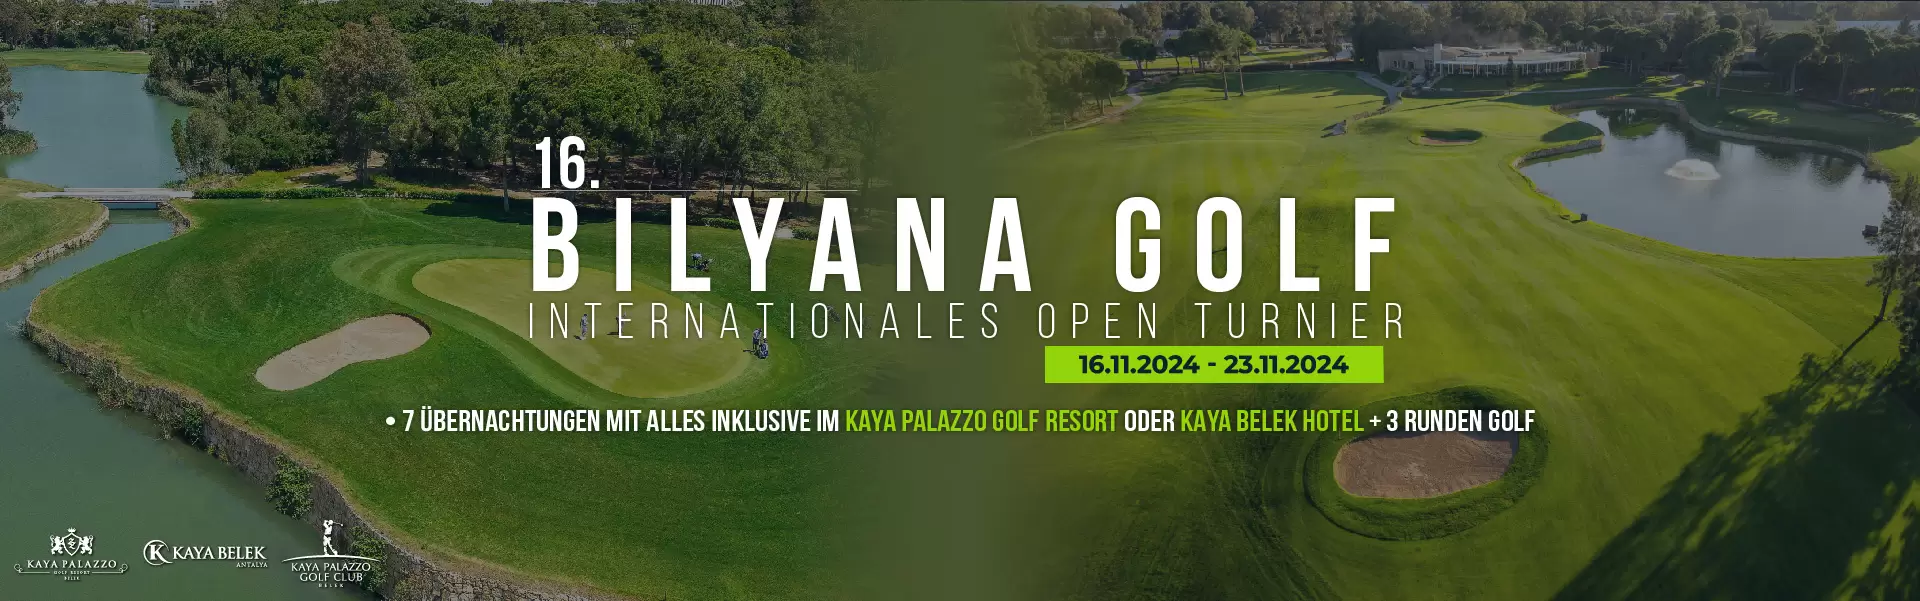 Bilyana Golf - 16Th BILYANA GOLF INTERNATIONAL OPEN TURNIER